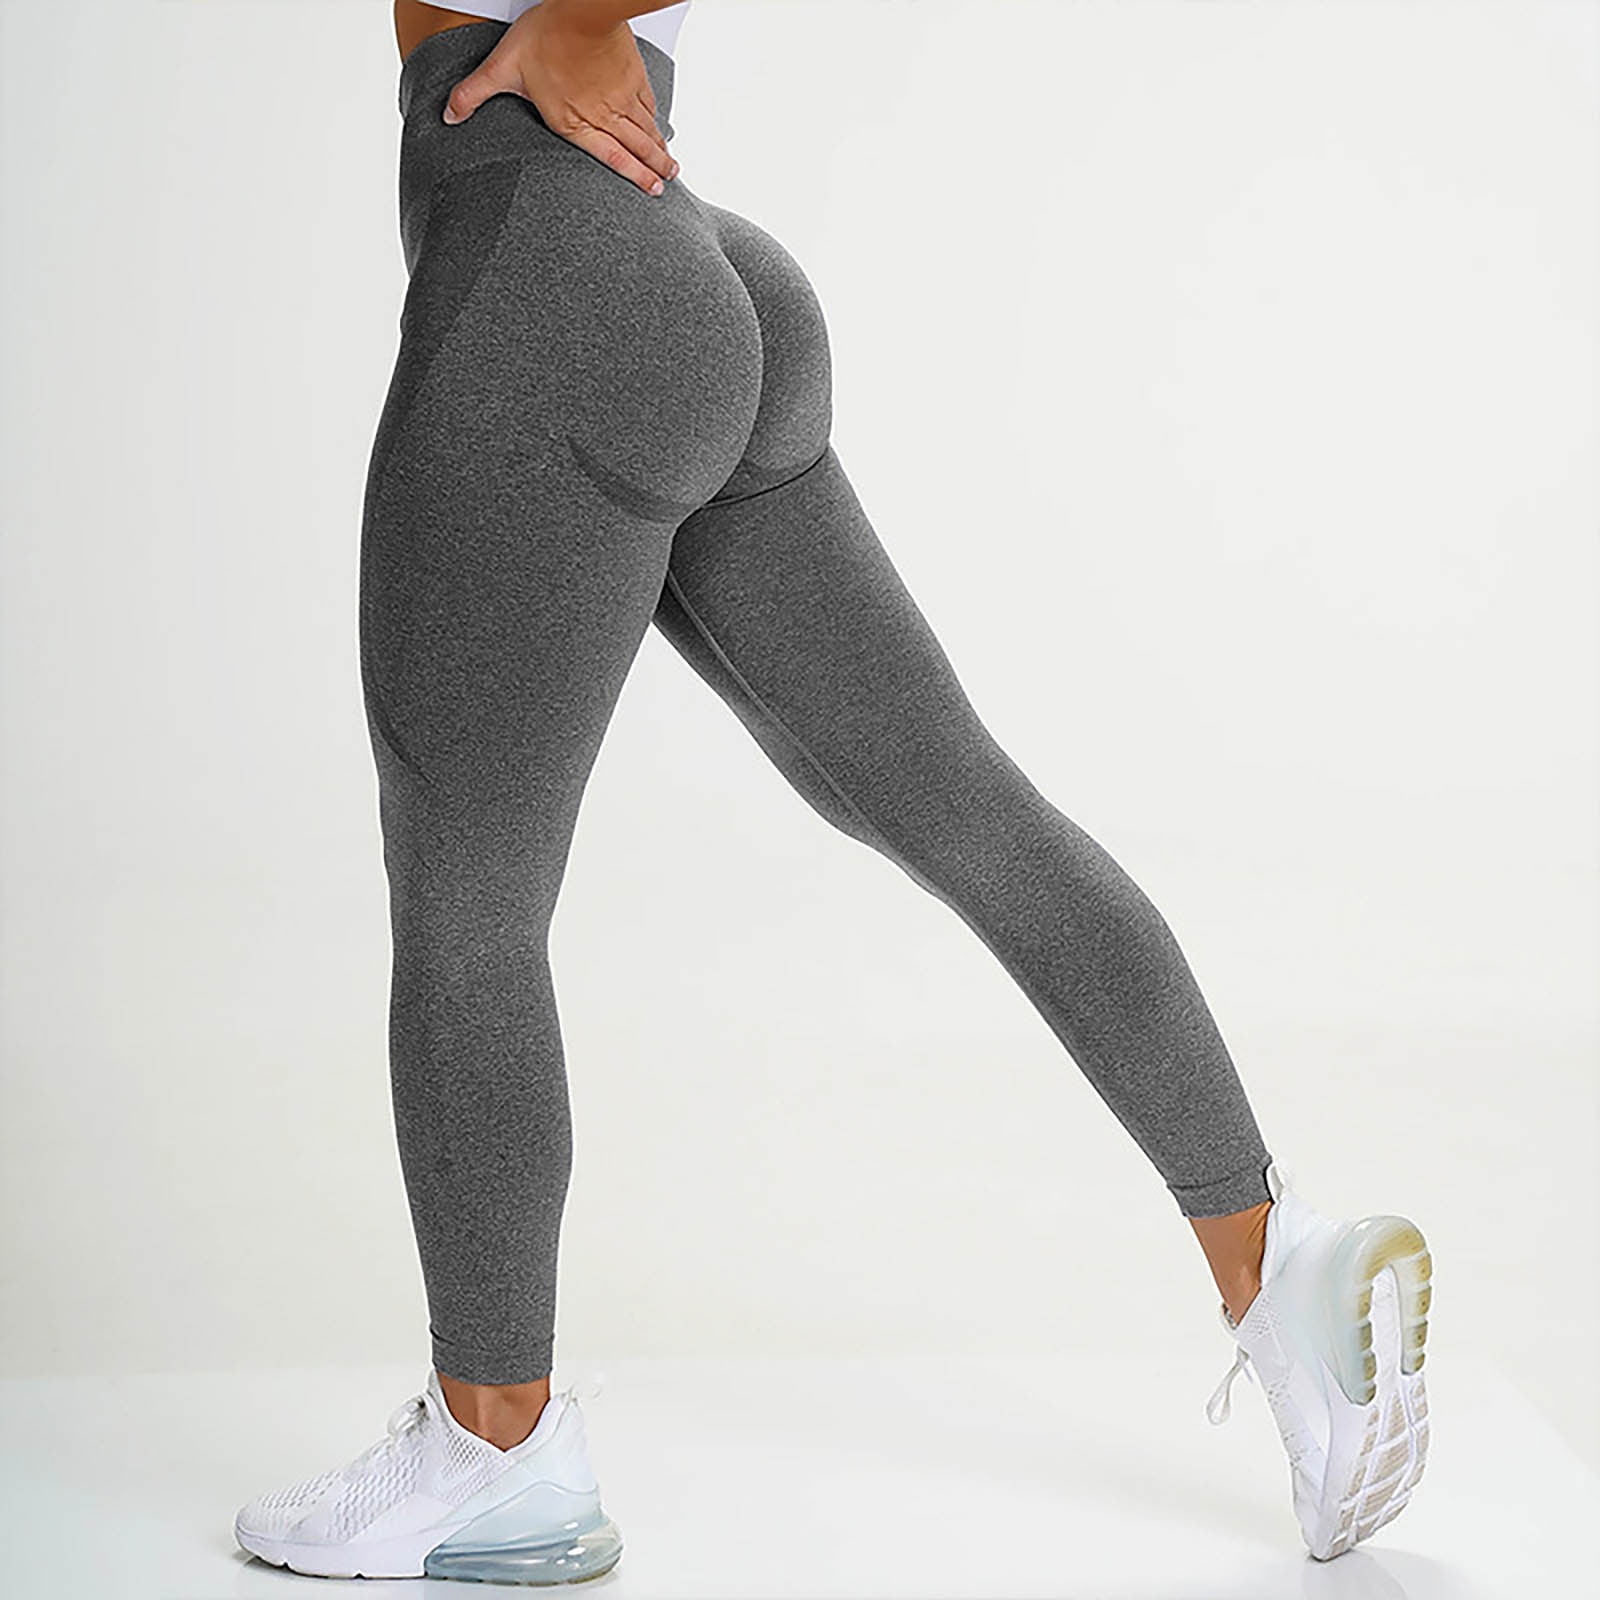 Women's Scrunch Butt Lifting Leggings Smile Contour High Waisted